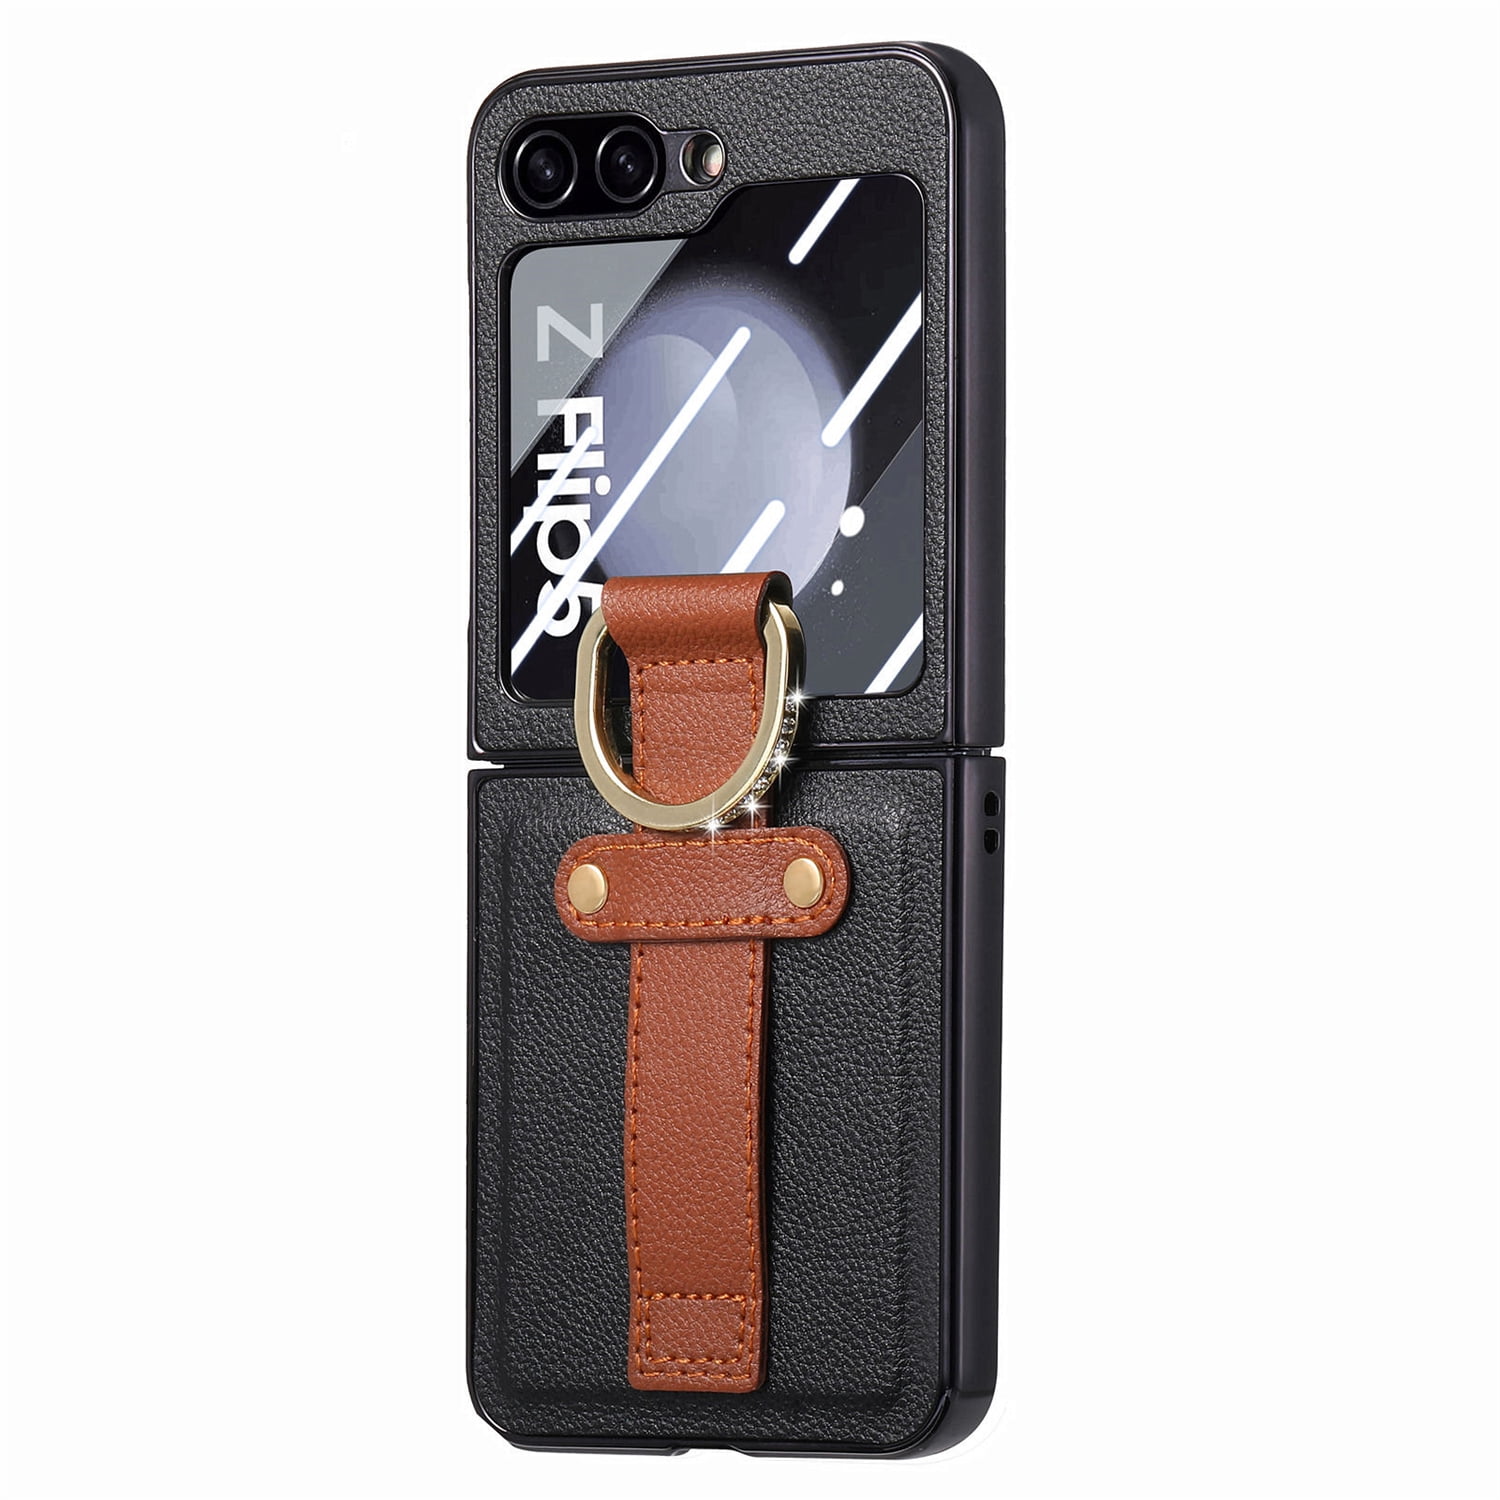 Z Flip 5 Case, Slim Leather Shockproof Phone Case For Samsung Galaxy Z Flip  5 With Wrist Strap Holder